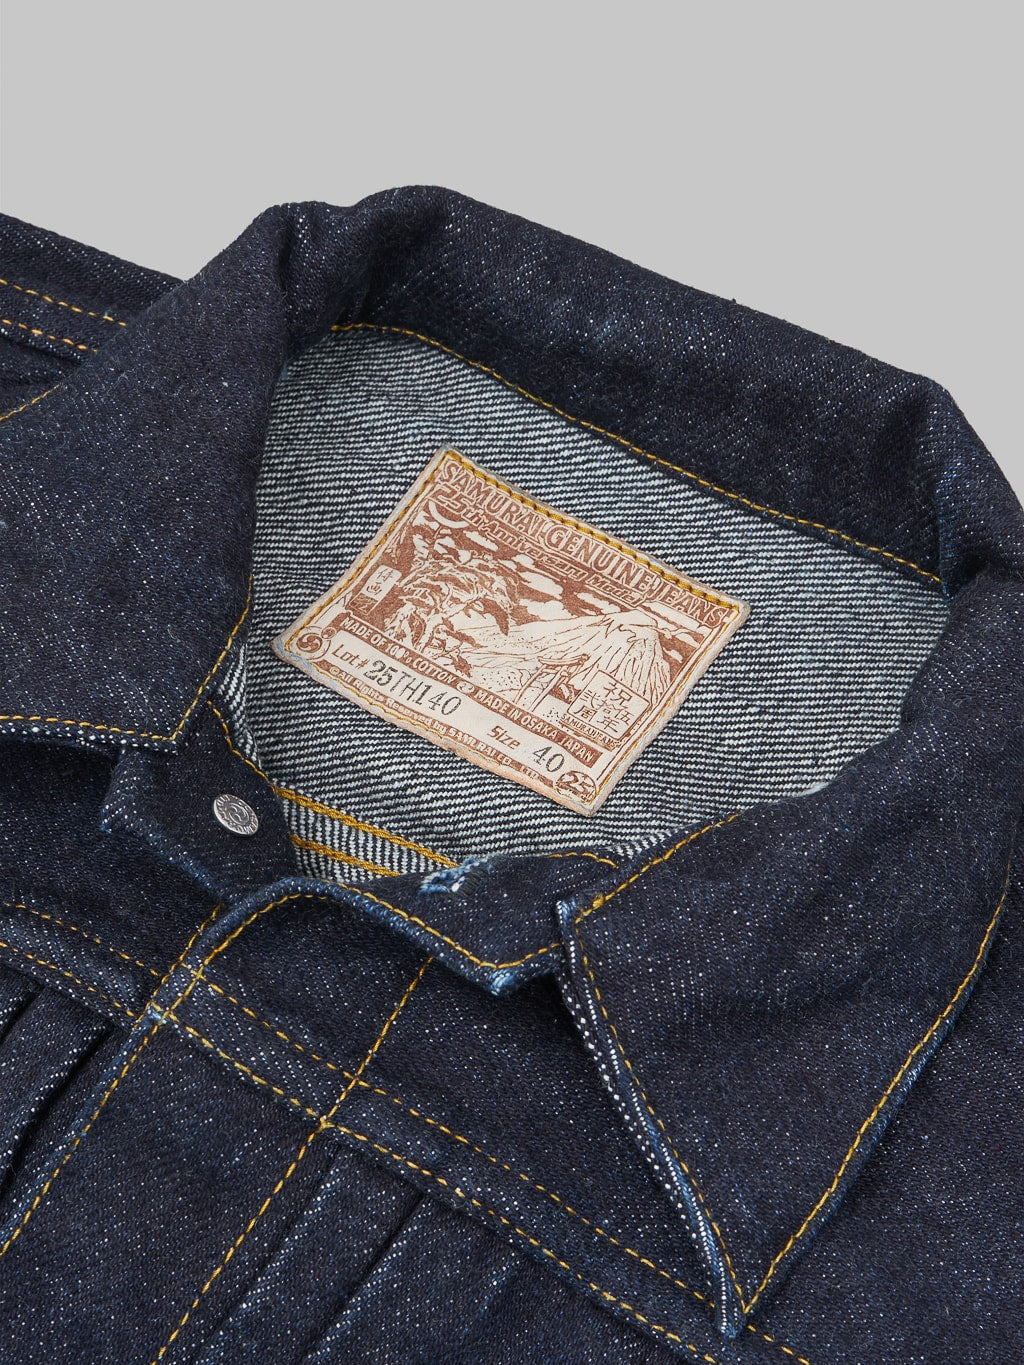 Samurai Jeans S551XX25oz 25th Limited Edition Type I Denim Jacket leather patch